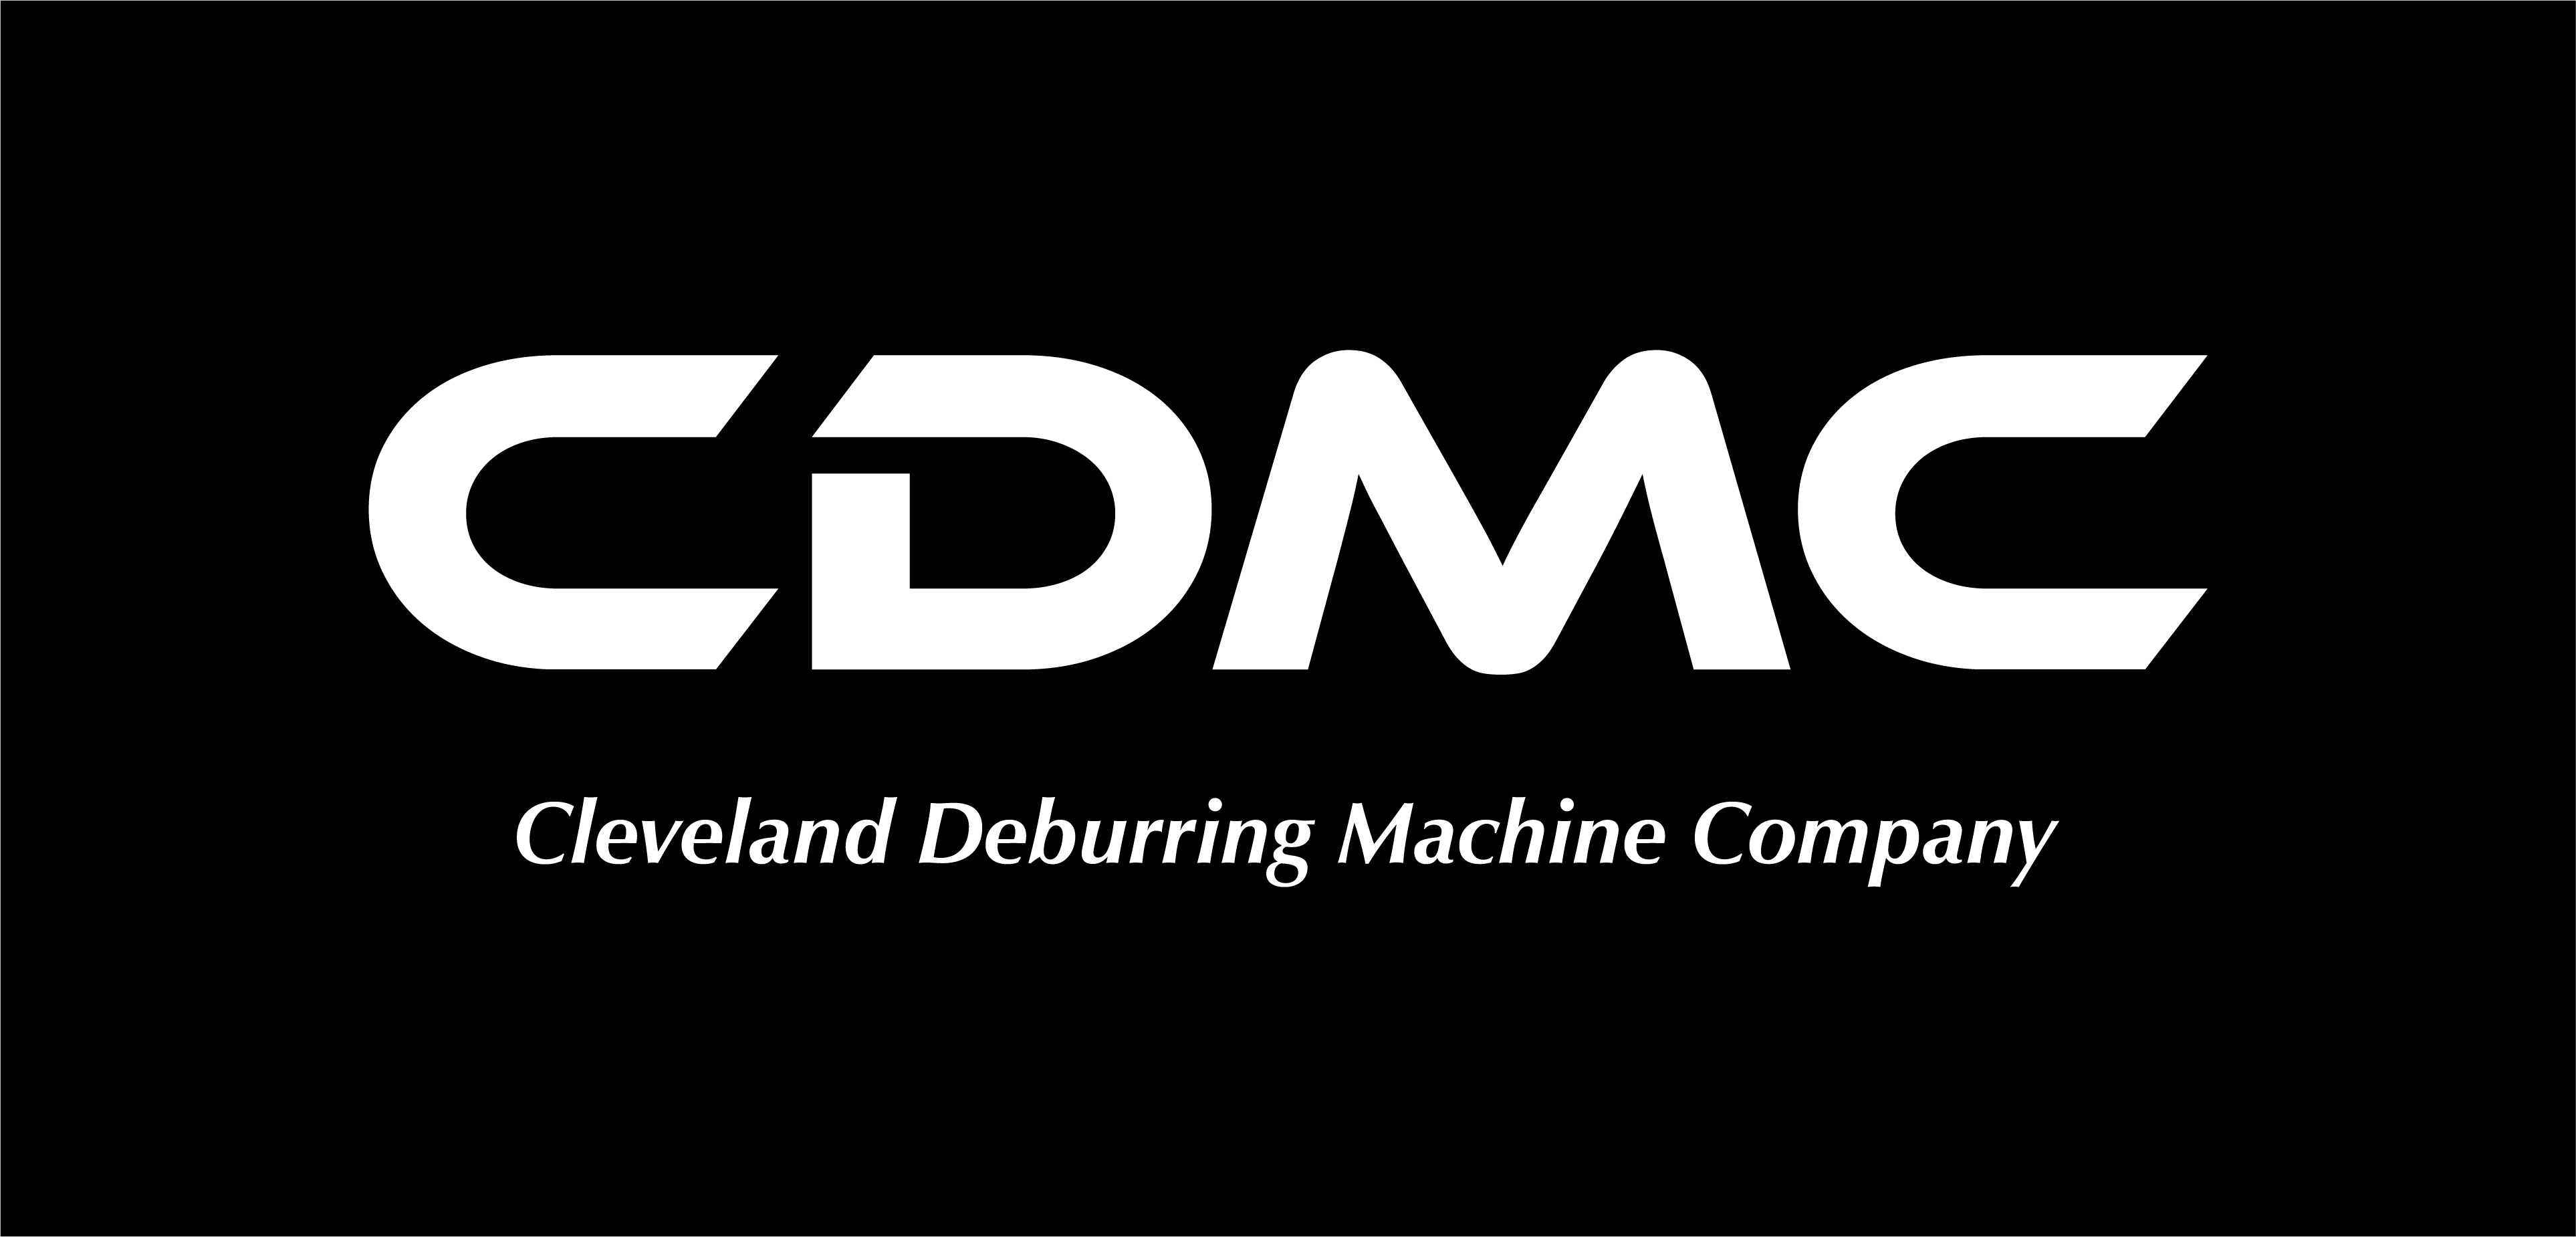 CDMC Cleveland Deburring Machine Company